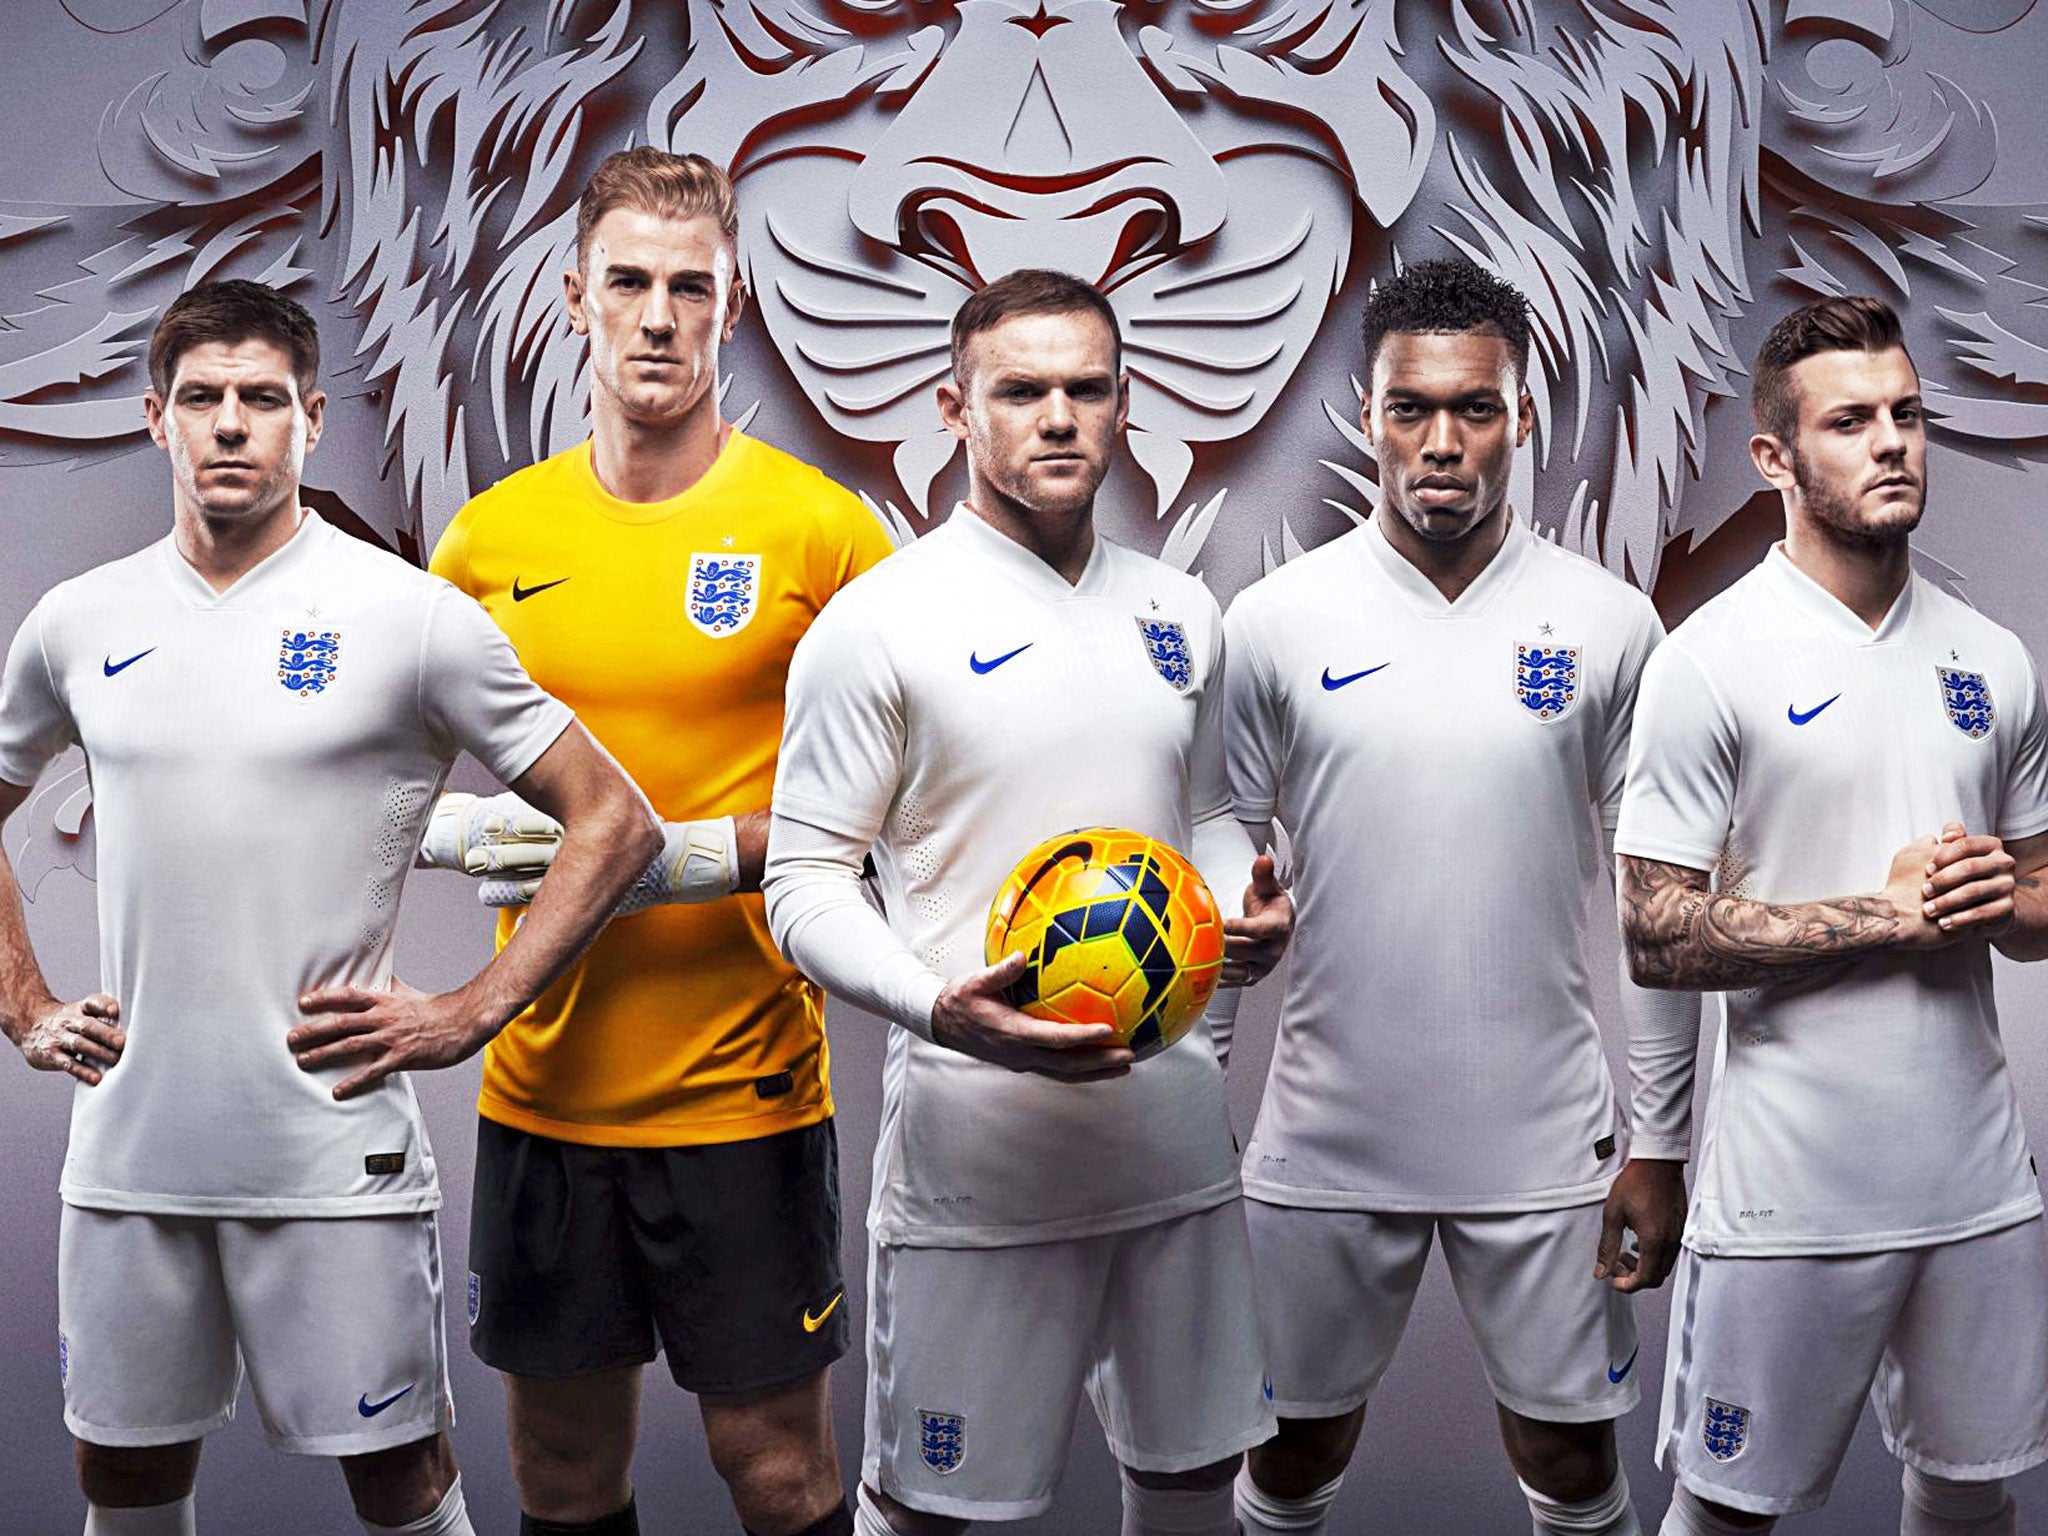 Five lions: England stars (from left) Steven Gerrard, Joe Hart, Wayne Rooney, Daniel Sturridge and Jack Wilshere show off the new Nike shirt for this summer's World Cup